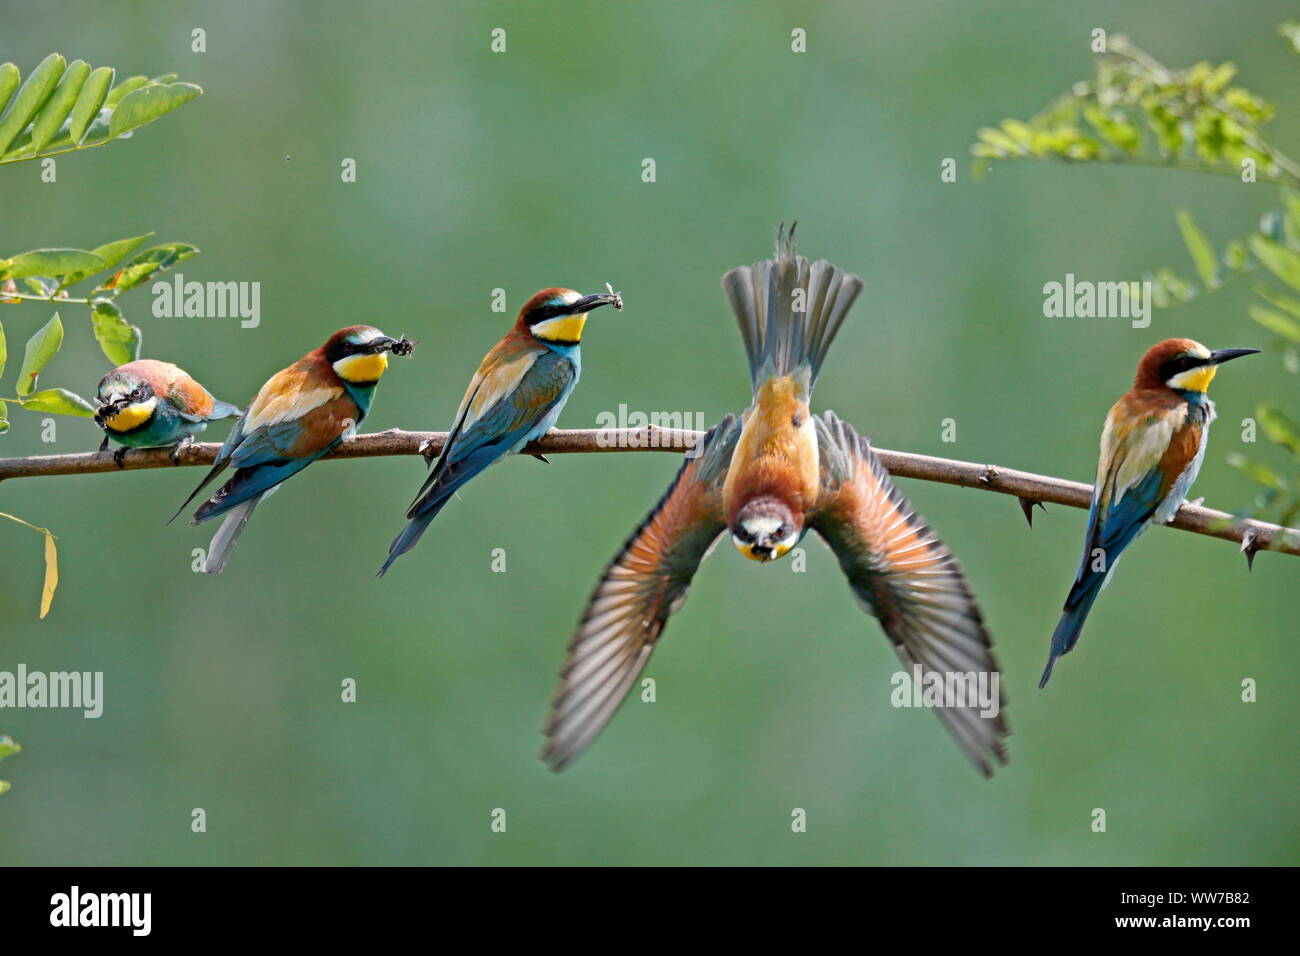 European bee-eater on a branch, wildlife, Rhineland-Palatinate, Germany Stock Photo